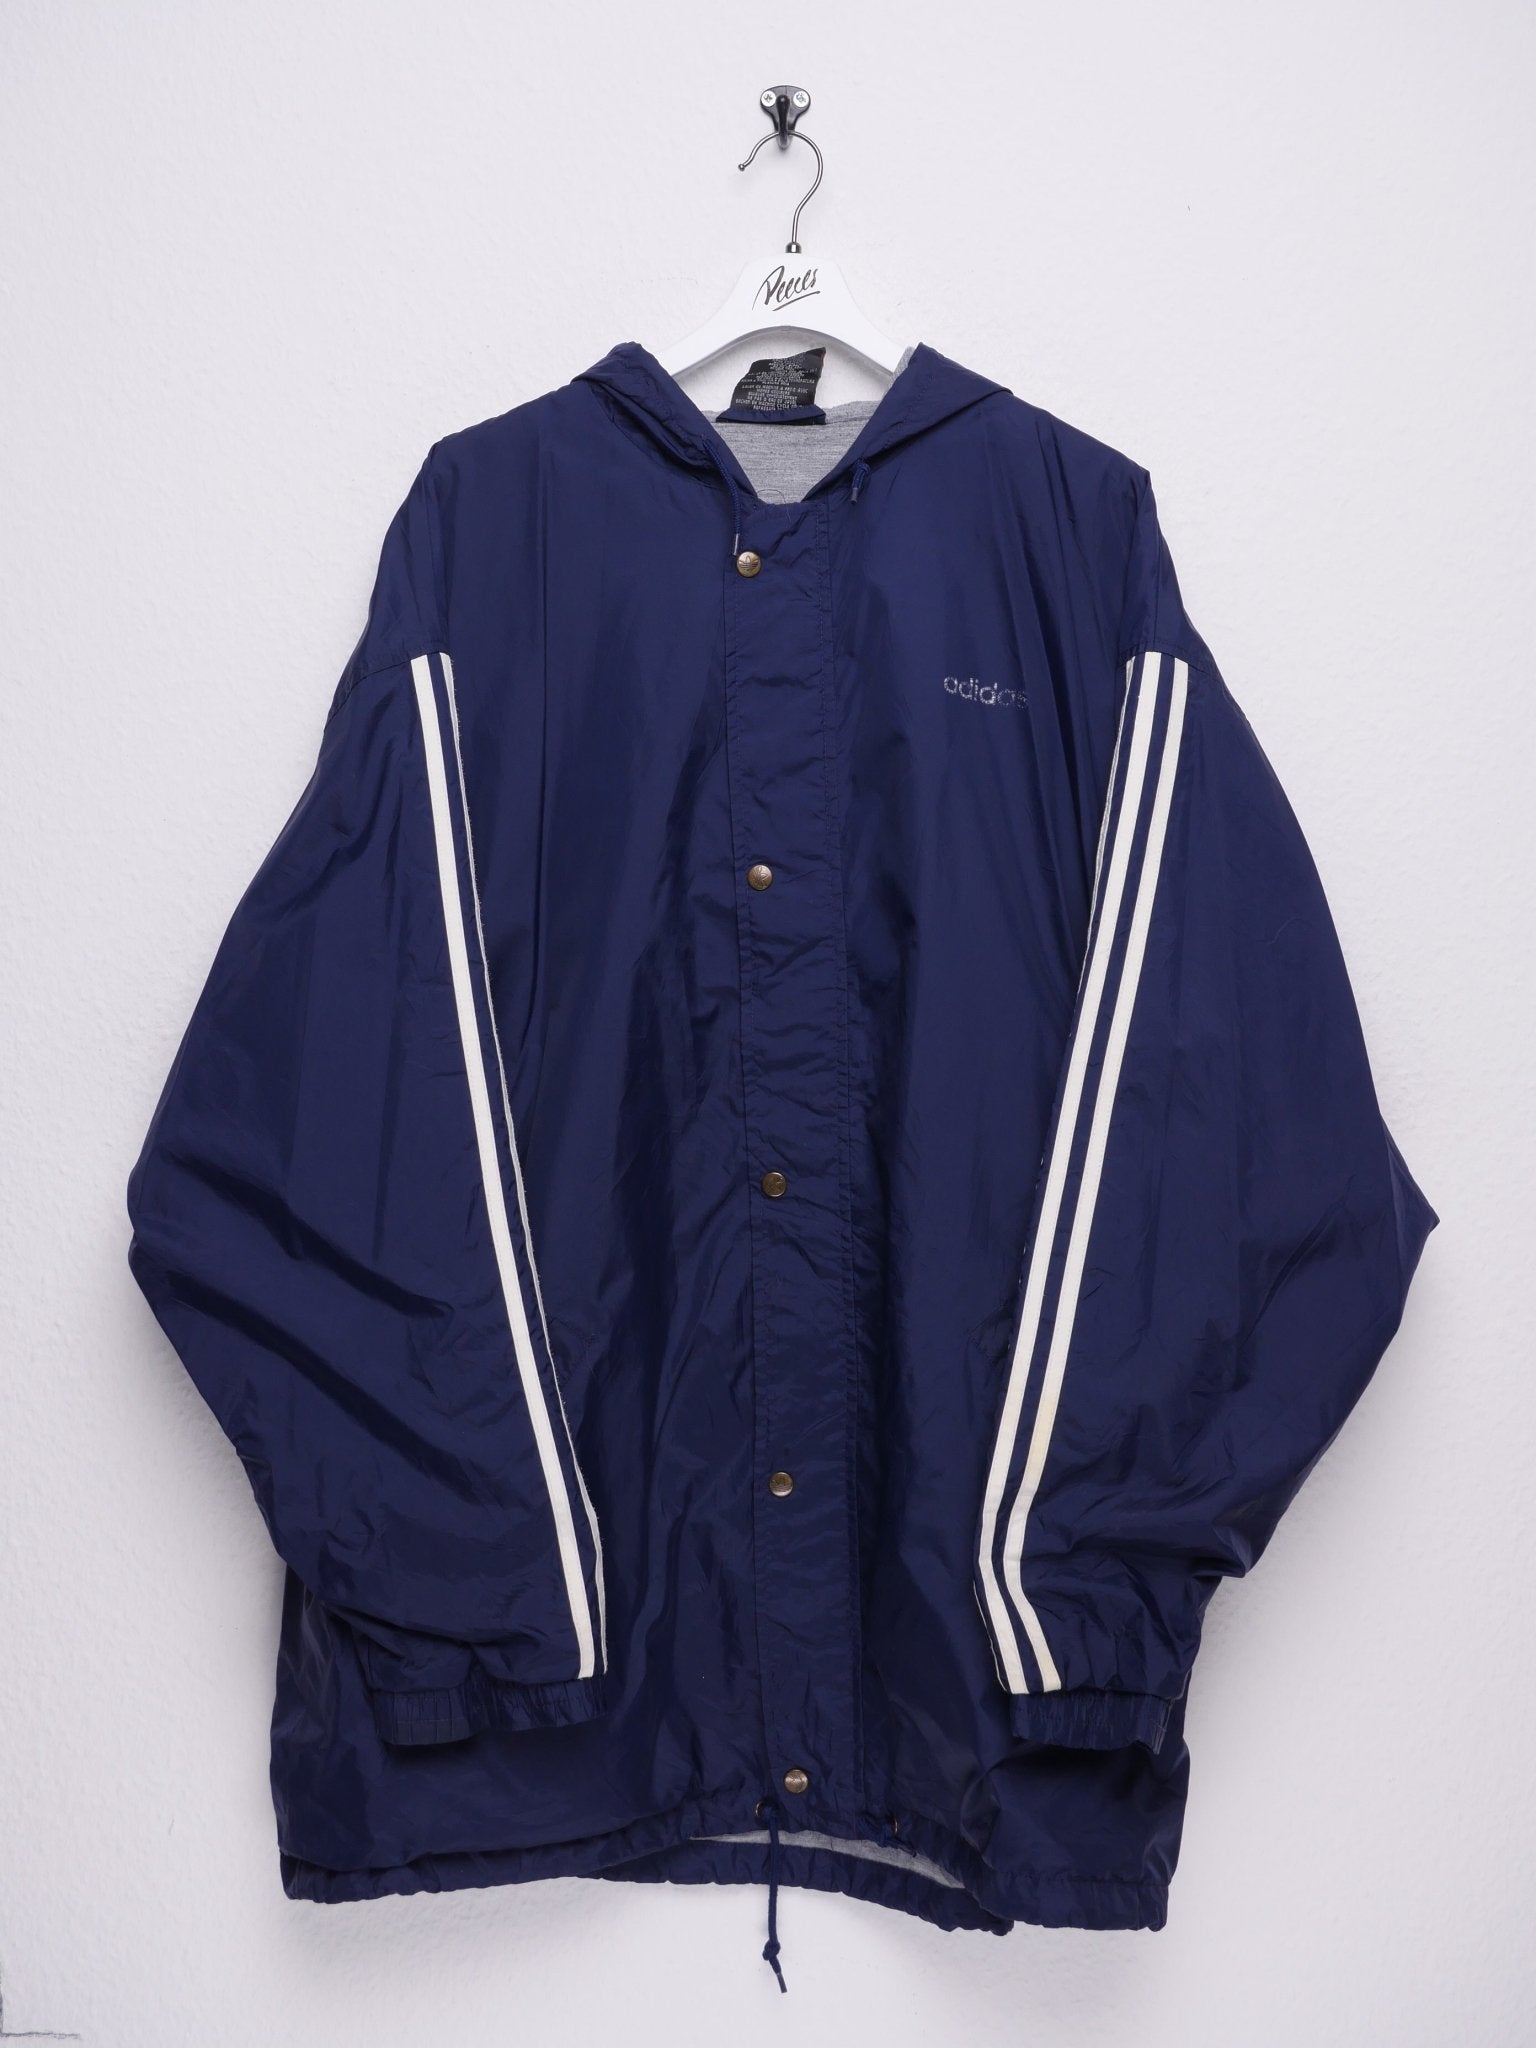 Adidas printed Spellout navy Vintage Track Jacket - Peeces